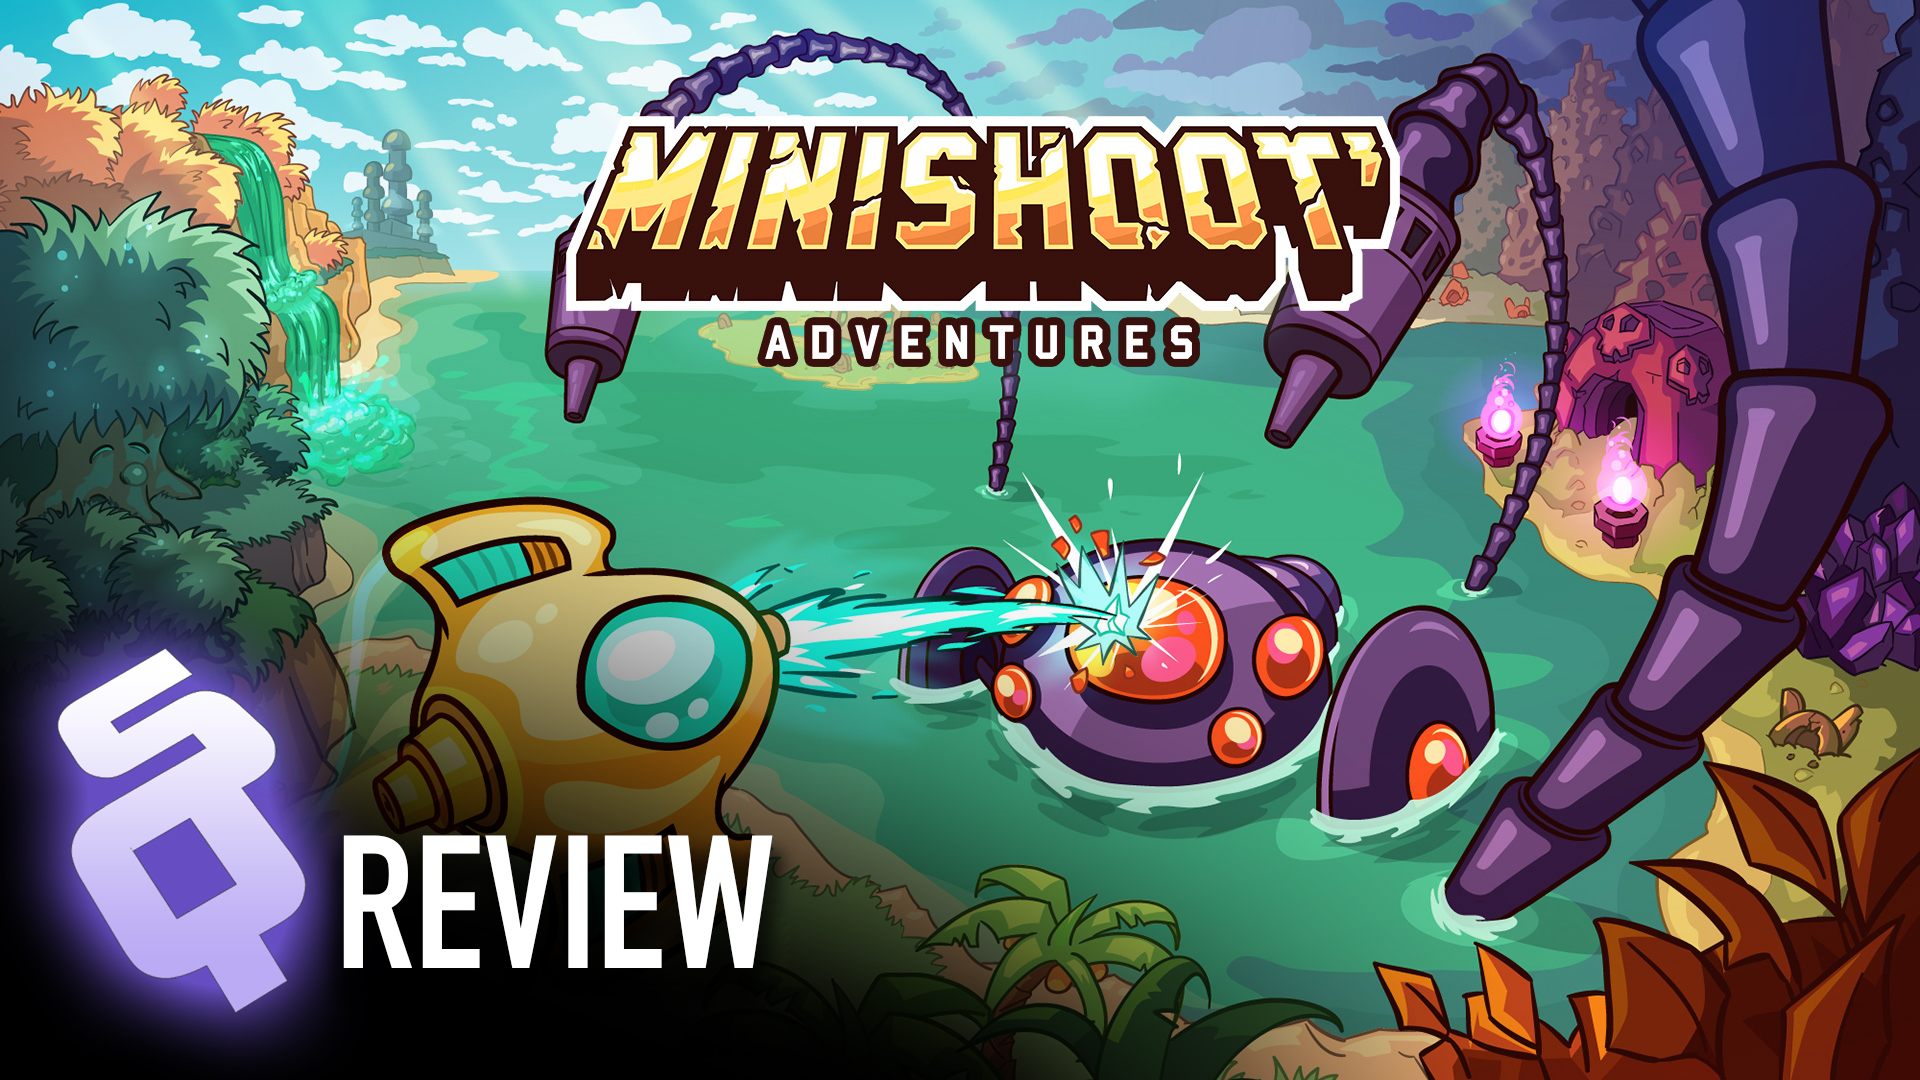 Minishoot’ Adventures review